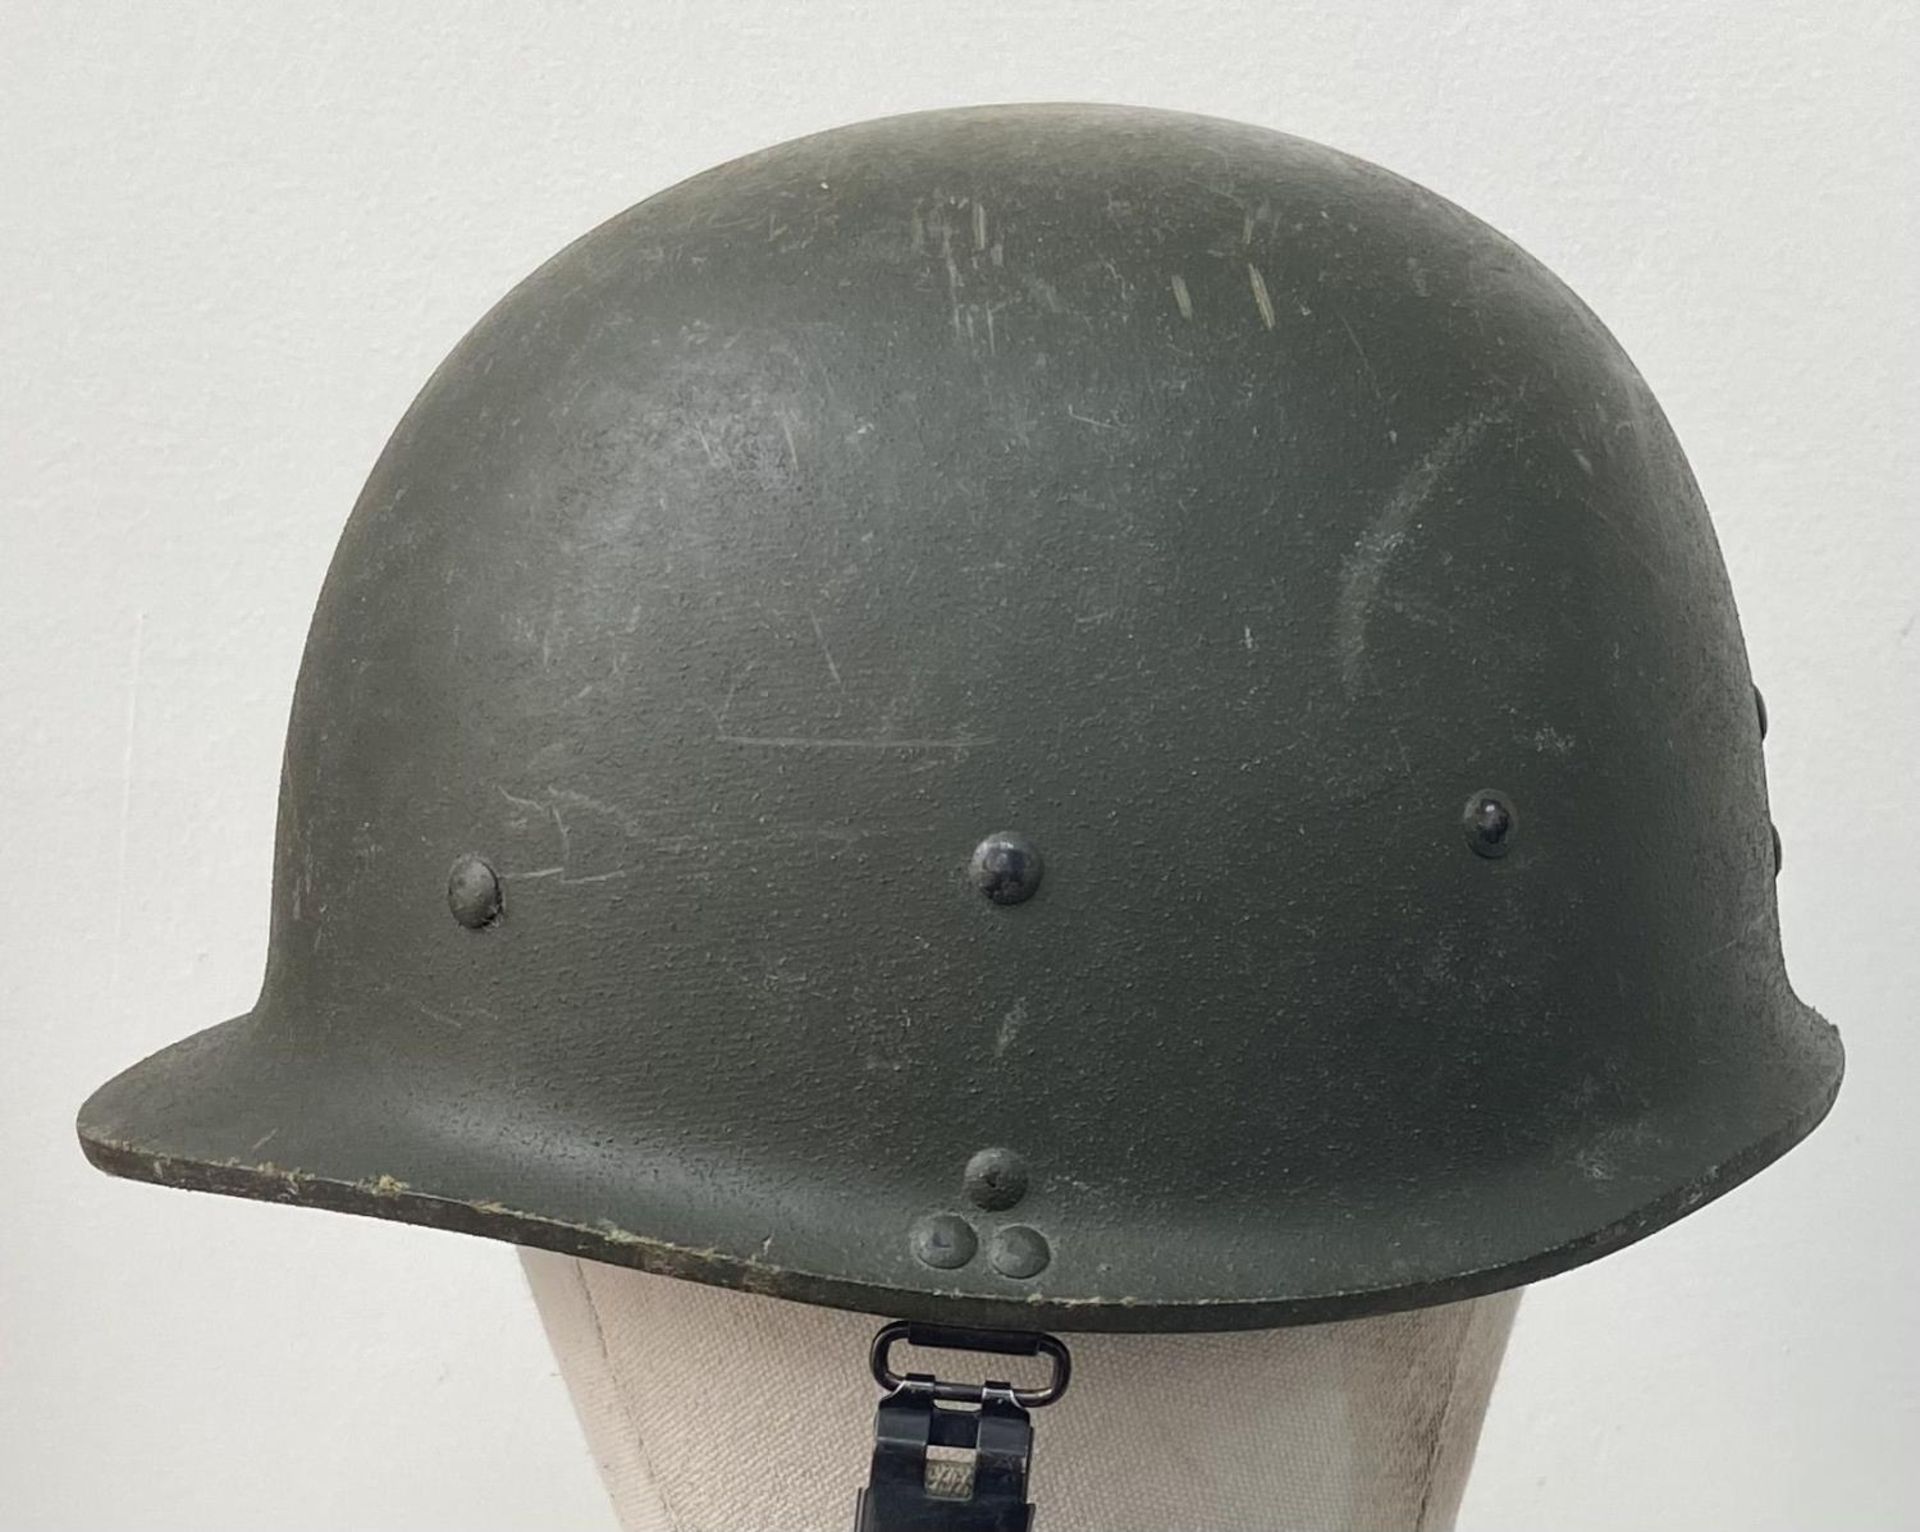 Gulf War 1 Veteran Bring Back Iraqi M80 Helmet. This helmet is in super condition as it never saw